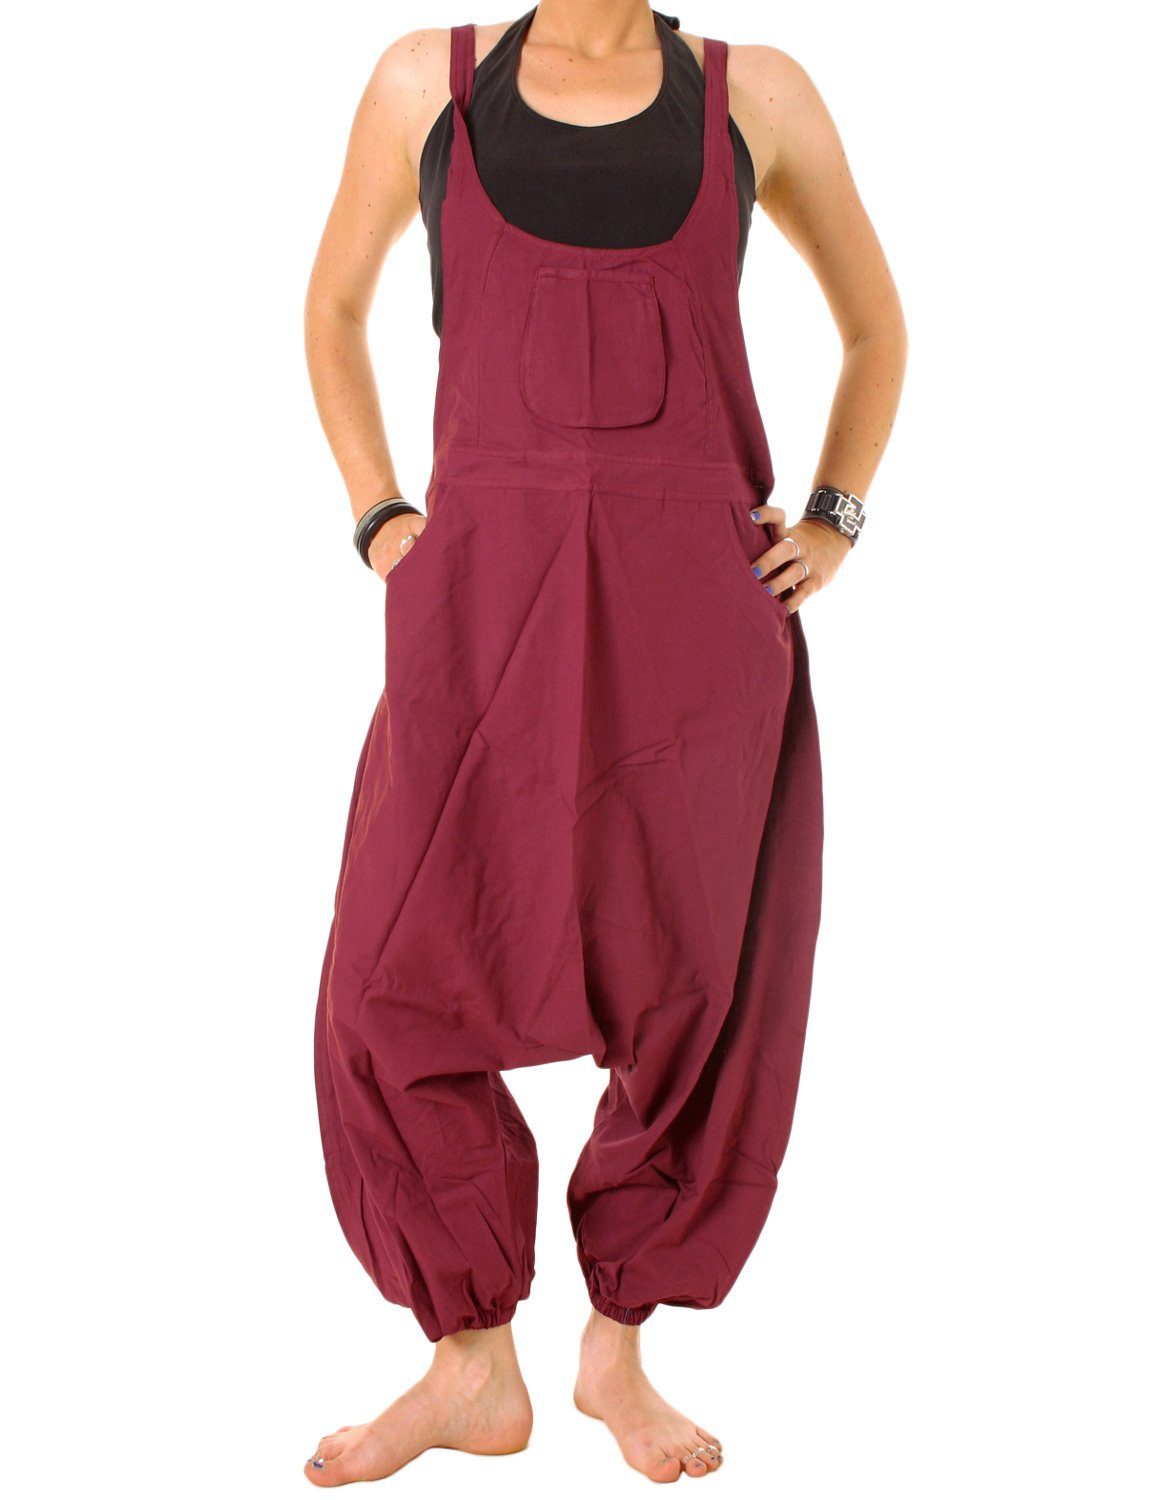 Vishes Latzhose Damen Sommer Hose Haremshose Overall Baumwolle bequem zu tragen, Hippie, Goa, einfarbig bordeaux